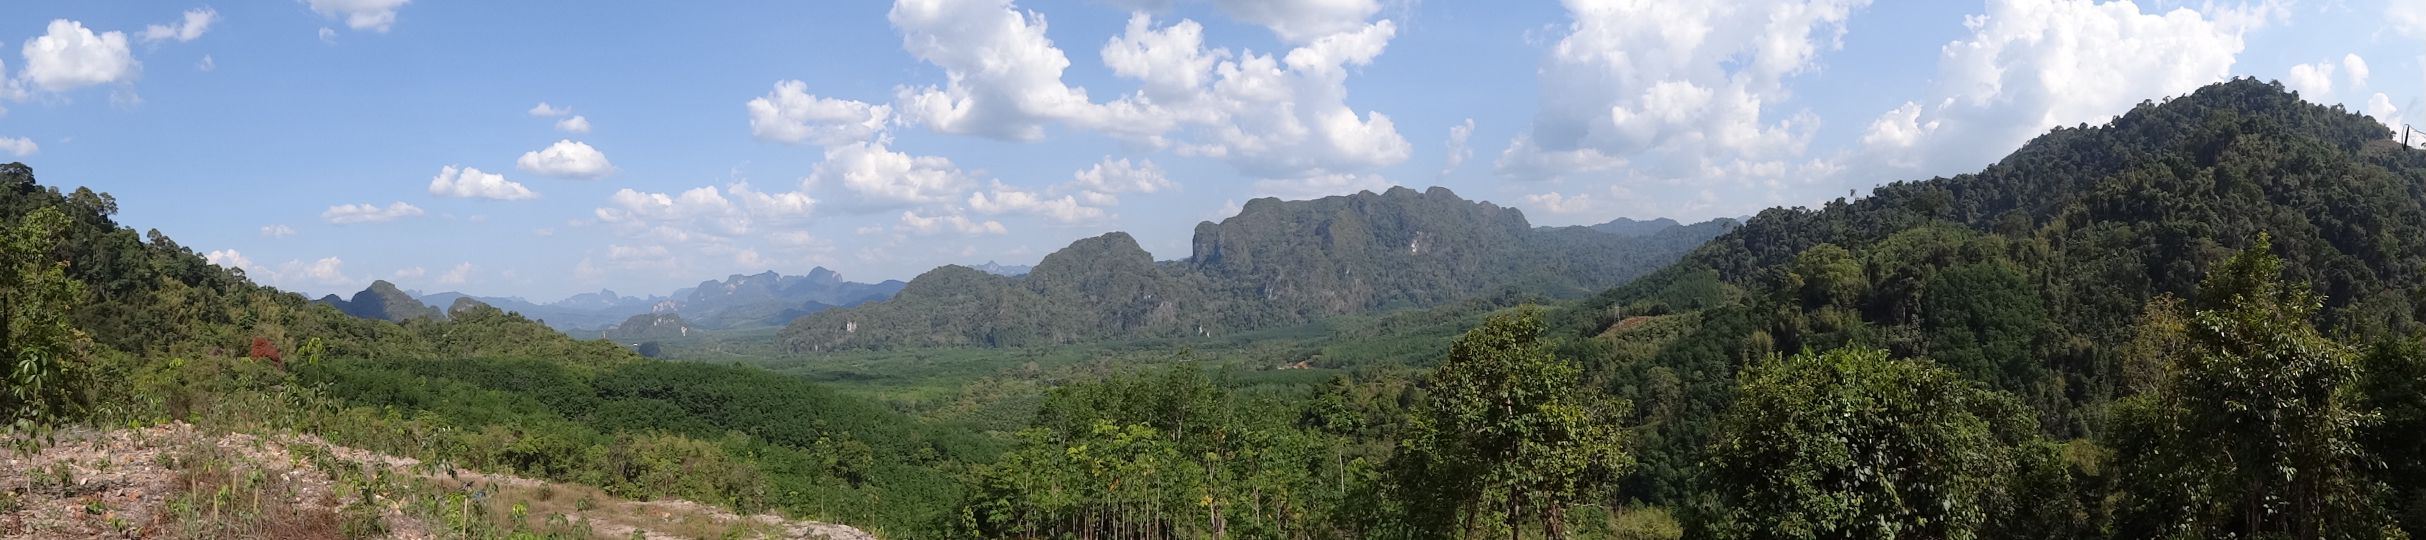 Thailand - Khao Sok National Park